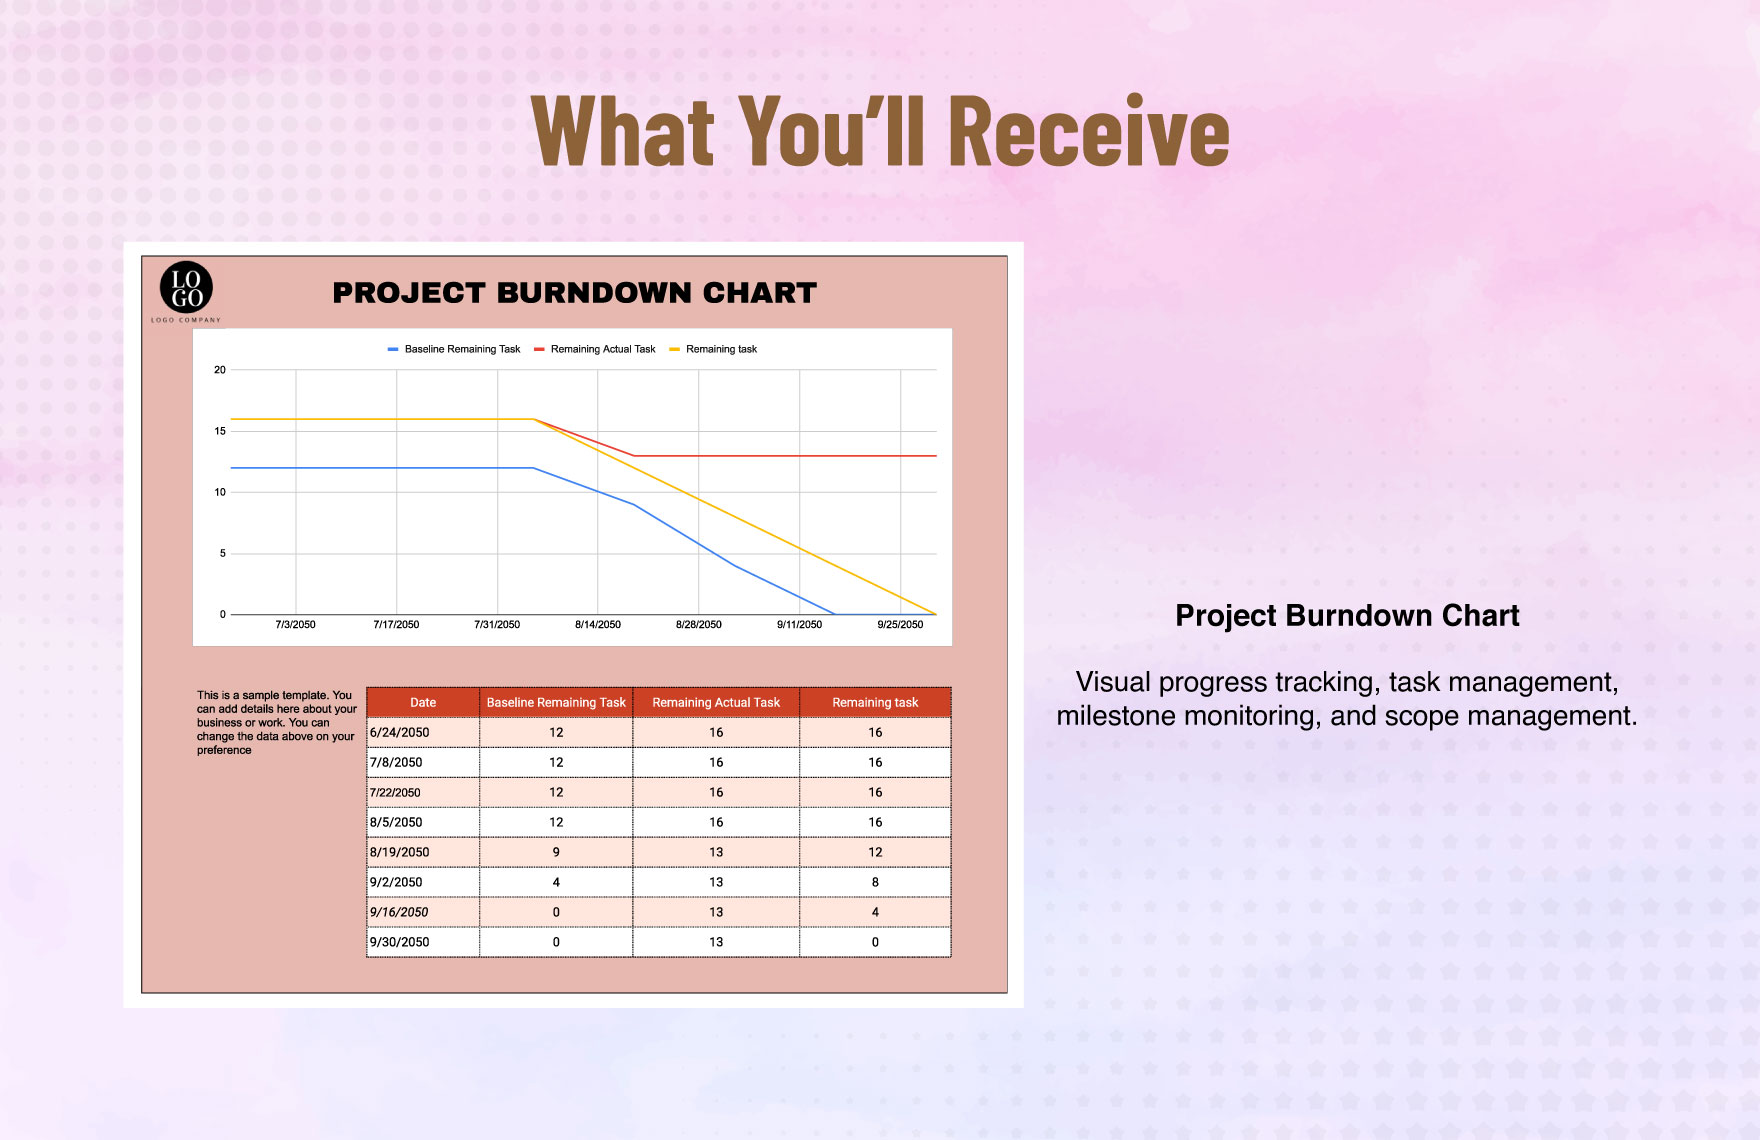 Project Burndown Chart Template